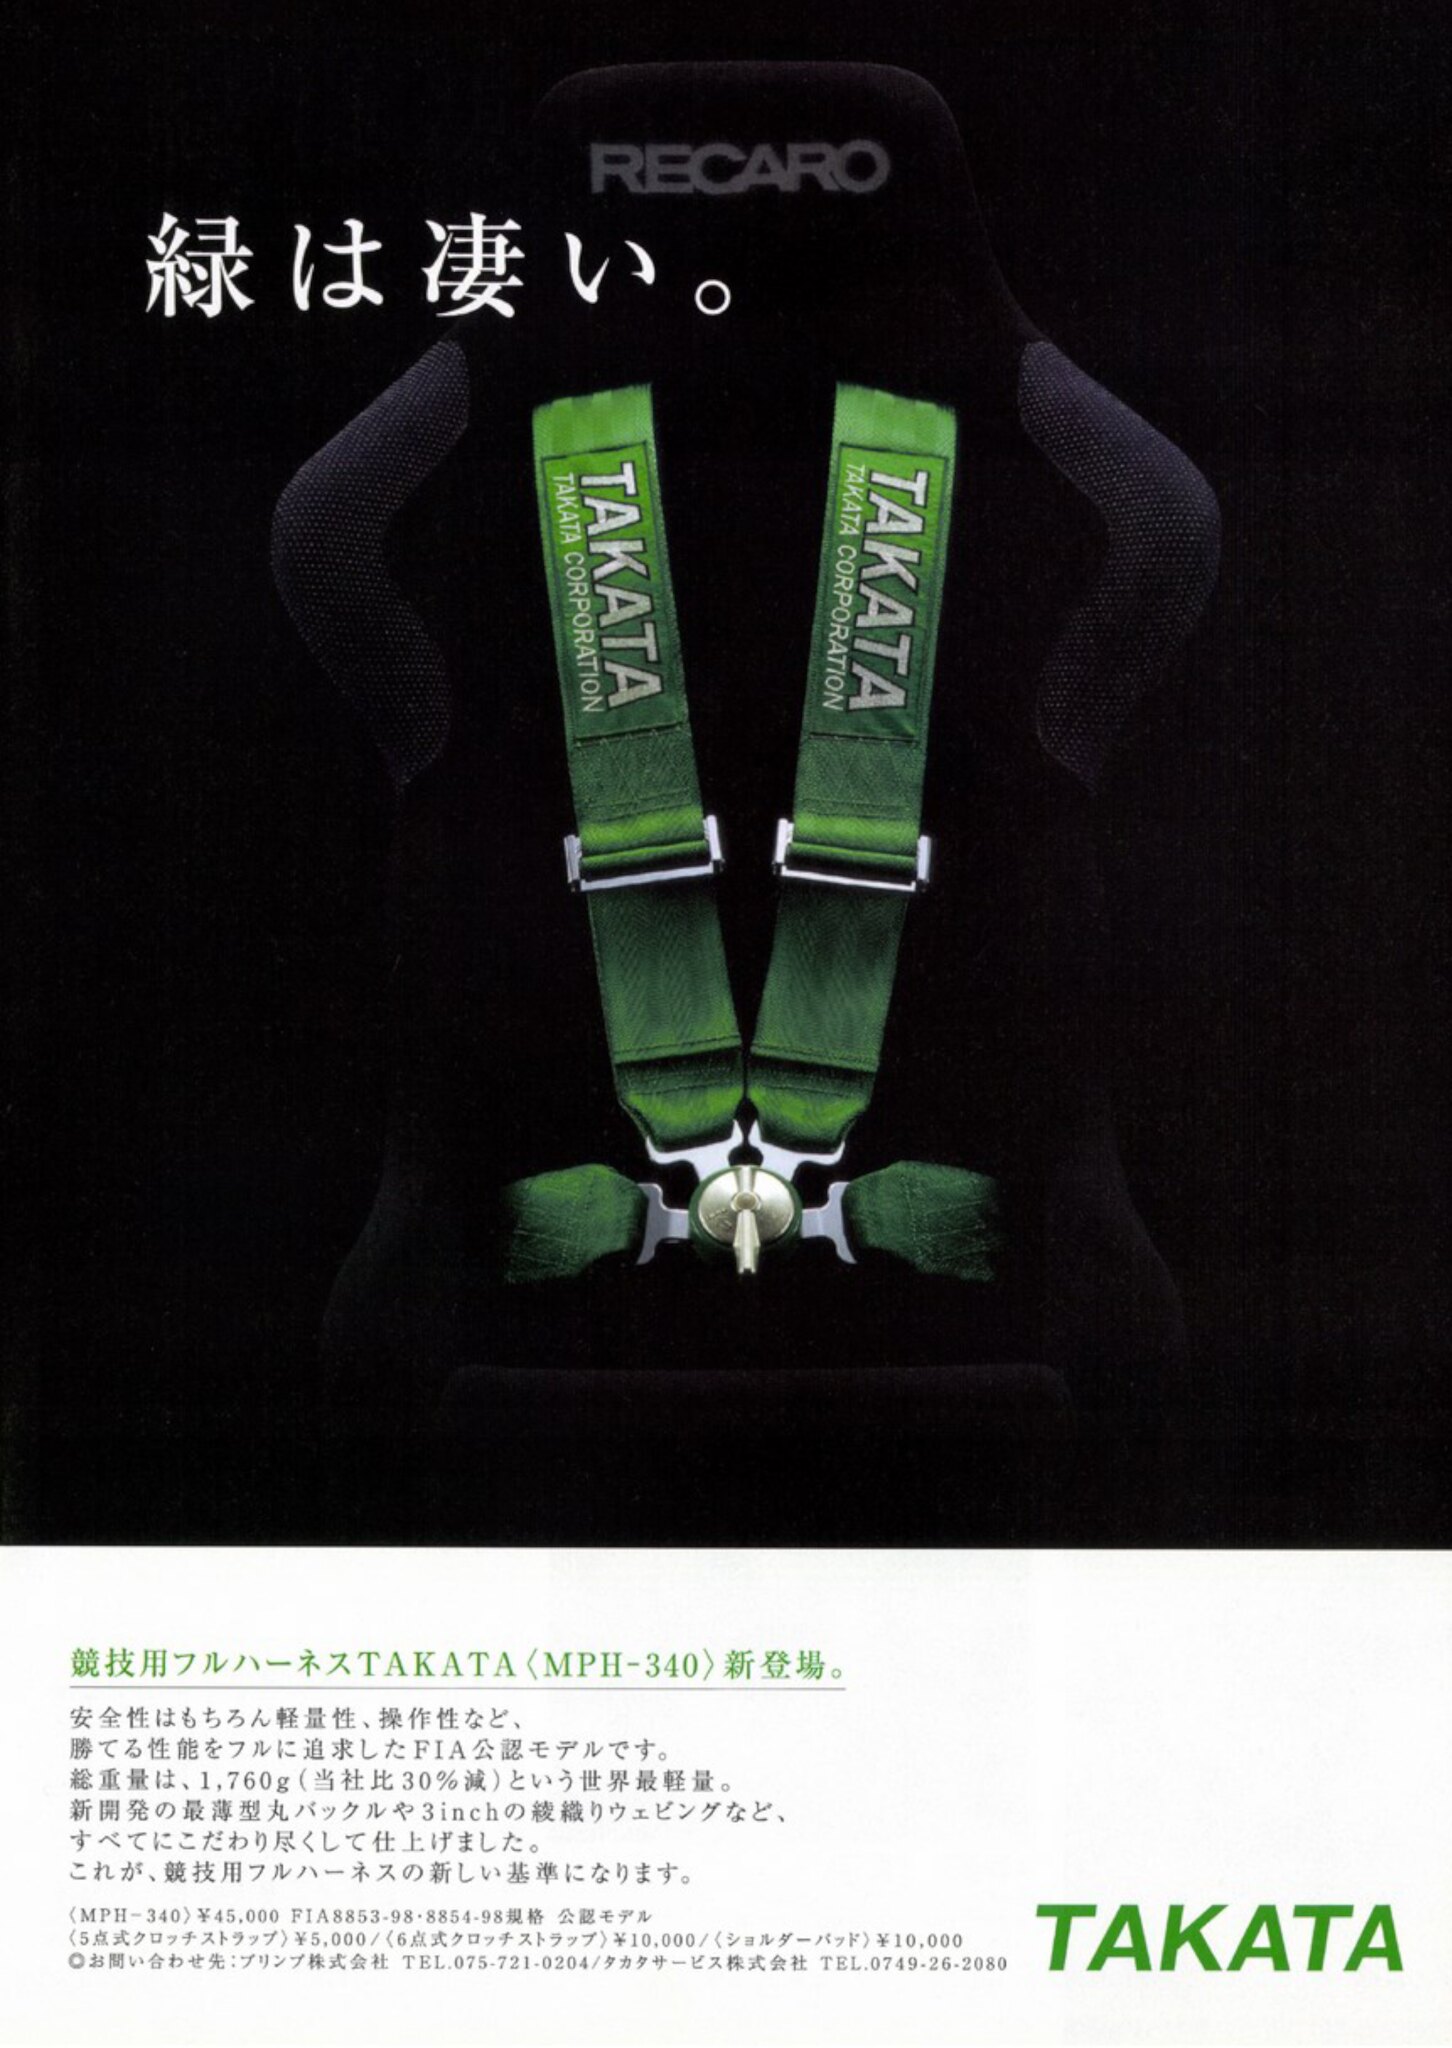 TAKATA Harness Advert